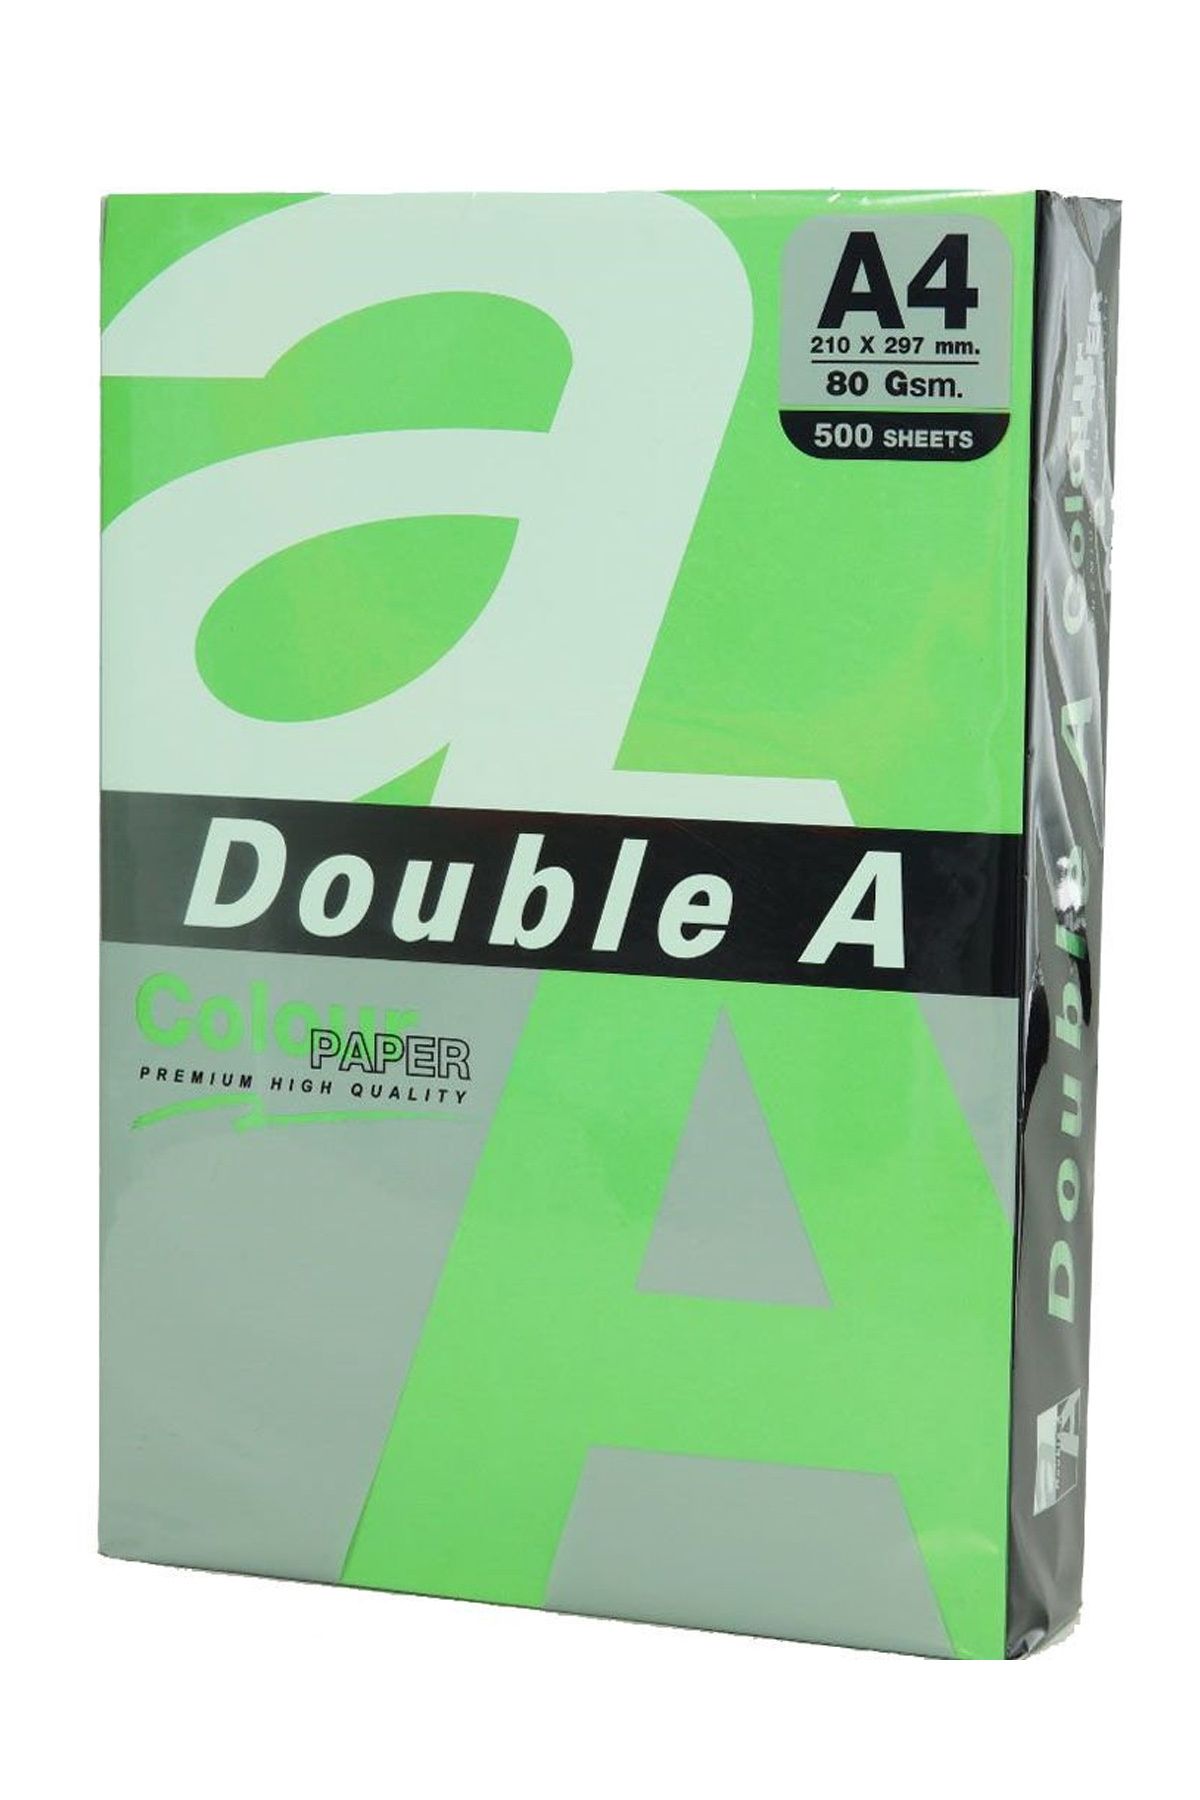 Toptan Bulurum Double A Renkli Fotokopi Kağıdı 500 LÜ A4 80 GR Pastel Zümrüt Yeşili